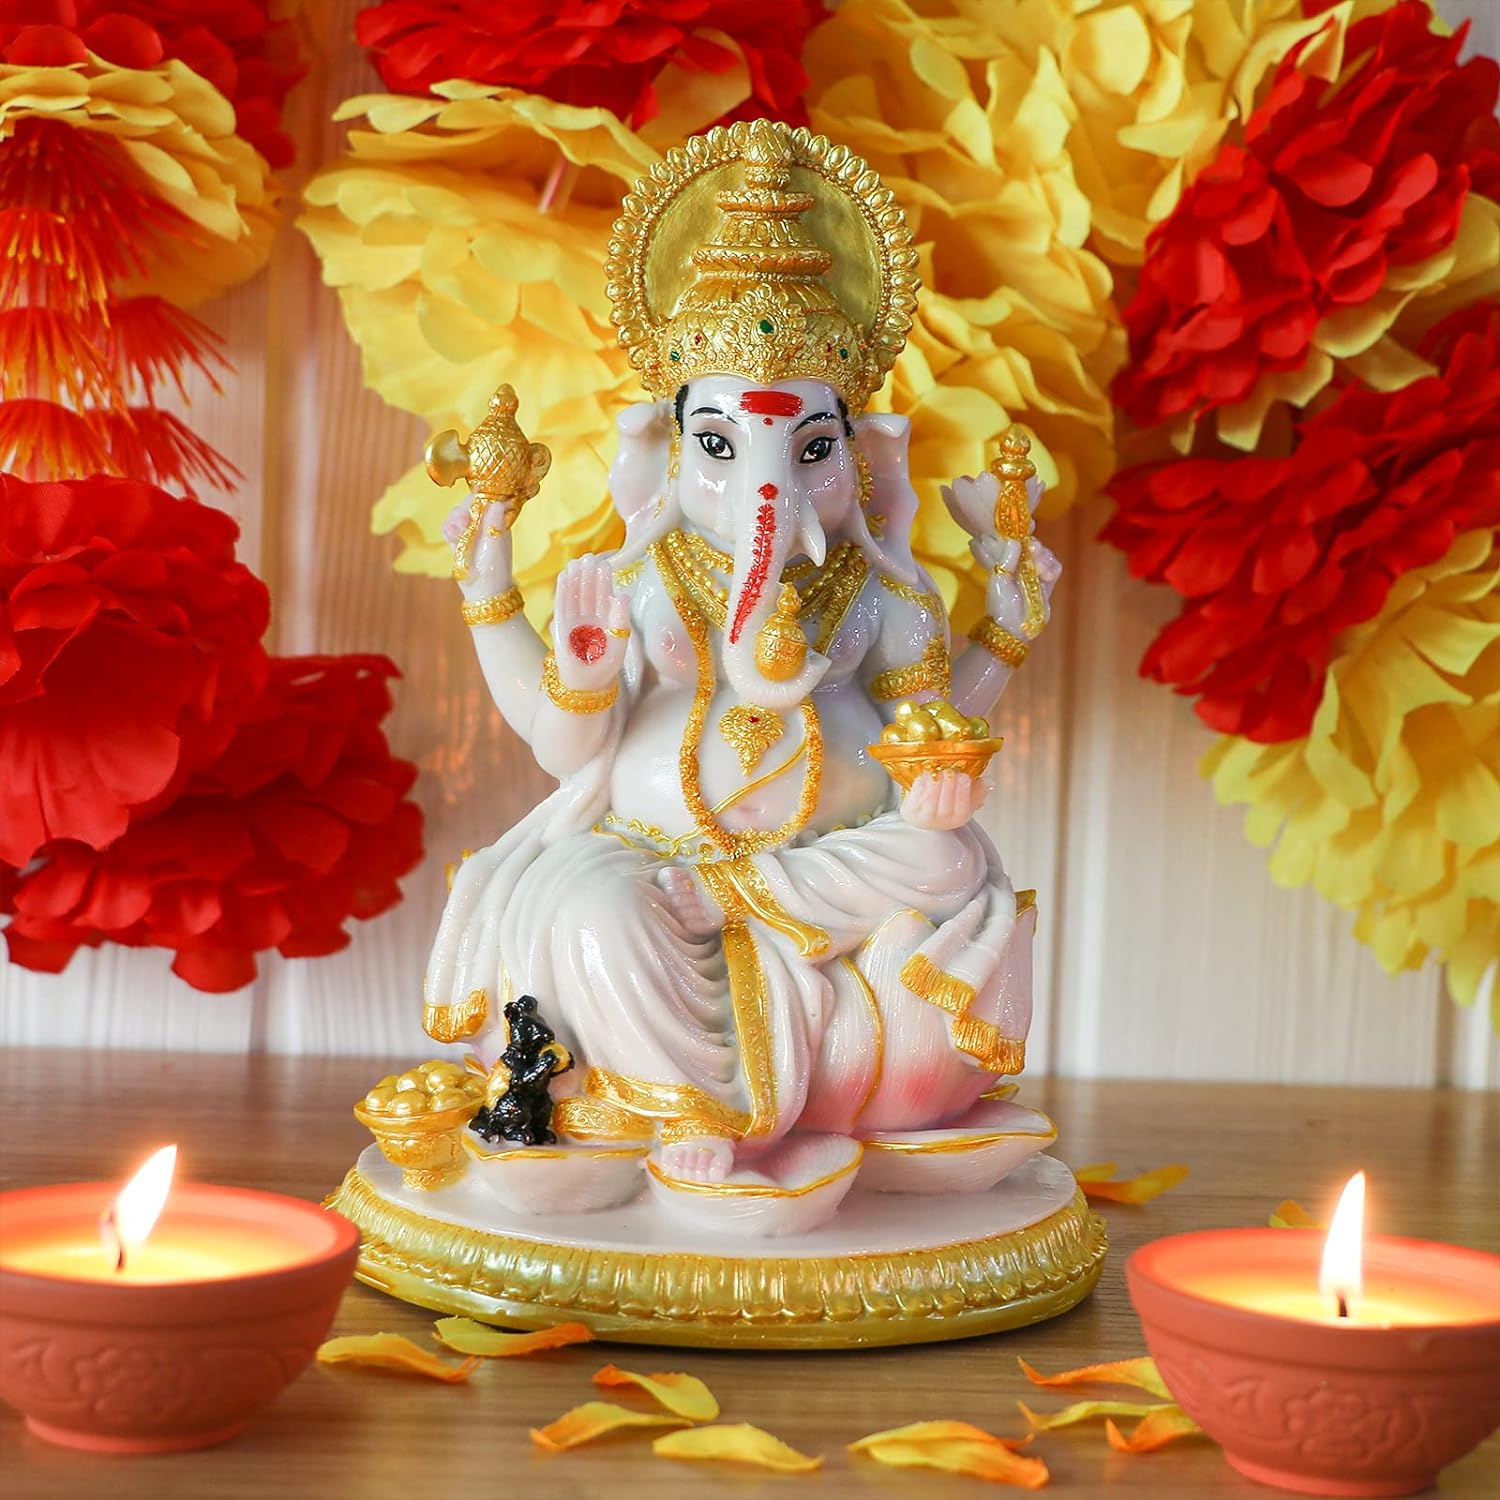 alikiki Hindu God Ganesh Chaturthi Figurine - 8.4”H Indian Idol Ganesha Statue Ganpati Elephant Hindu God Pooja Item Diwali Home Office Meditation Room Temple Mandir Altar Shrine Puja Decor